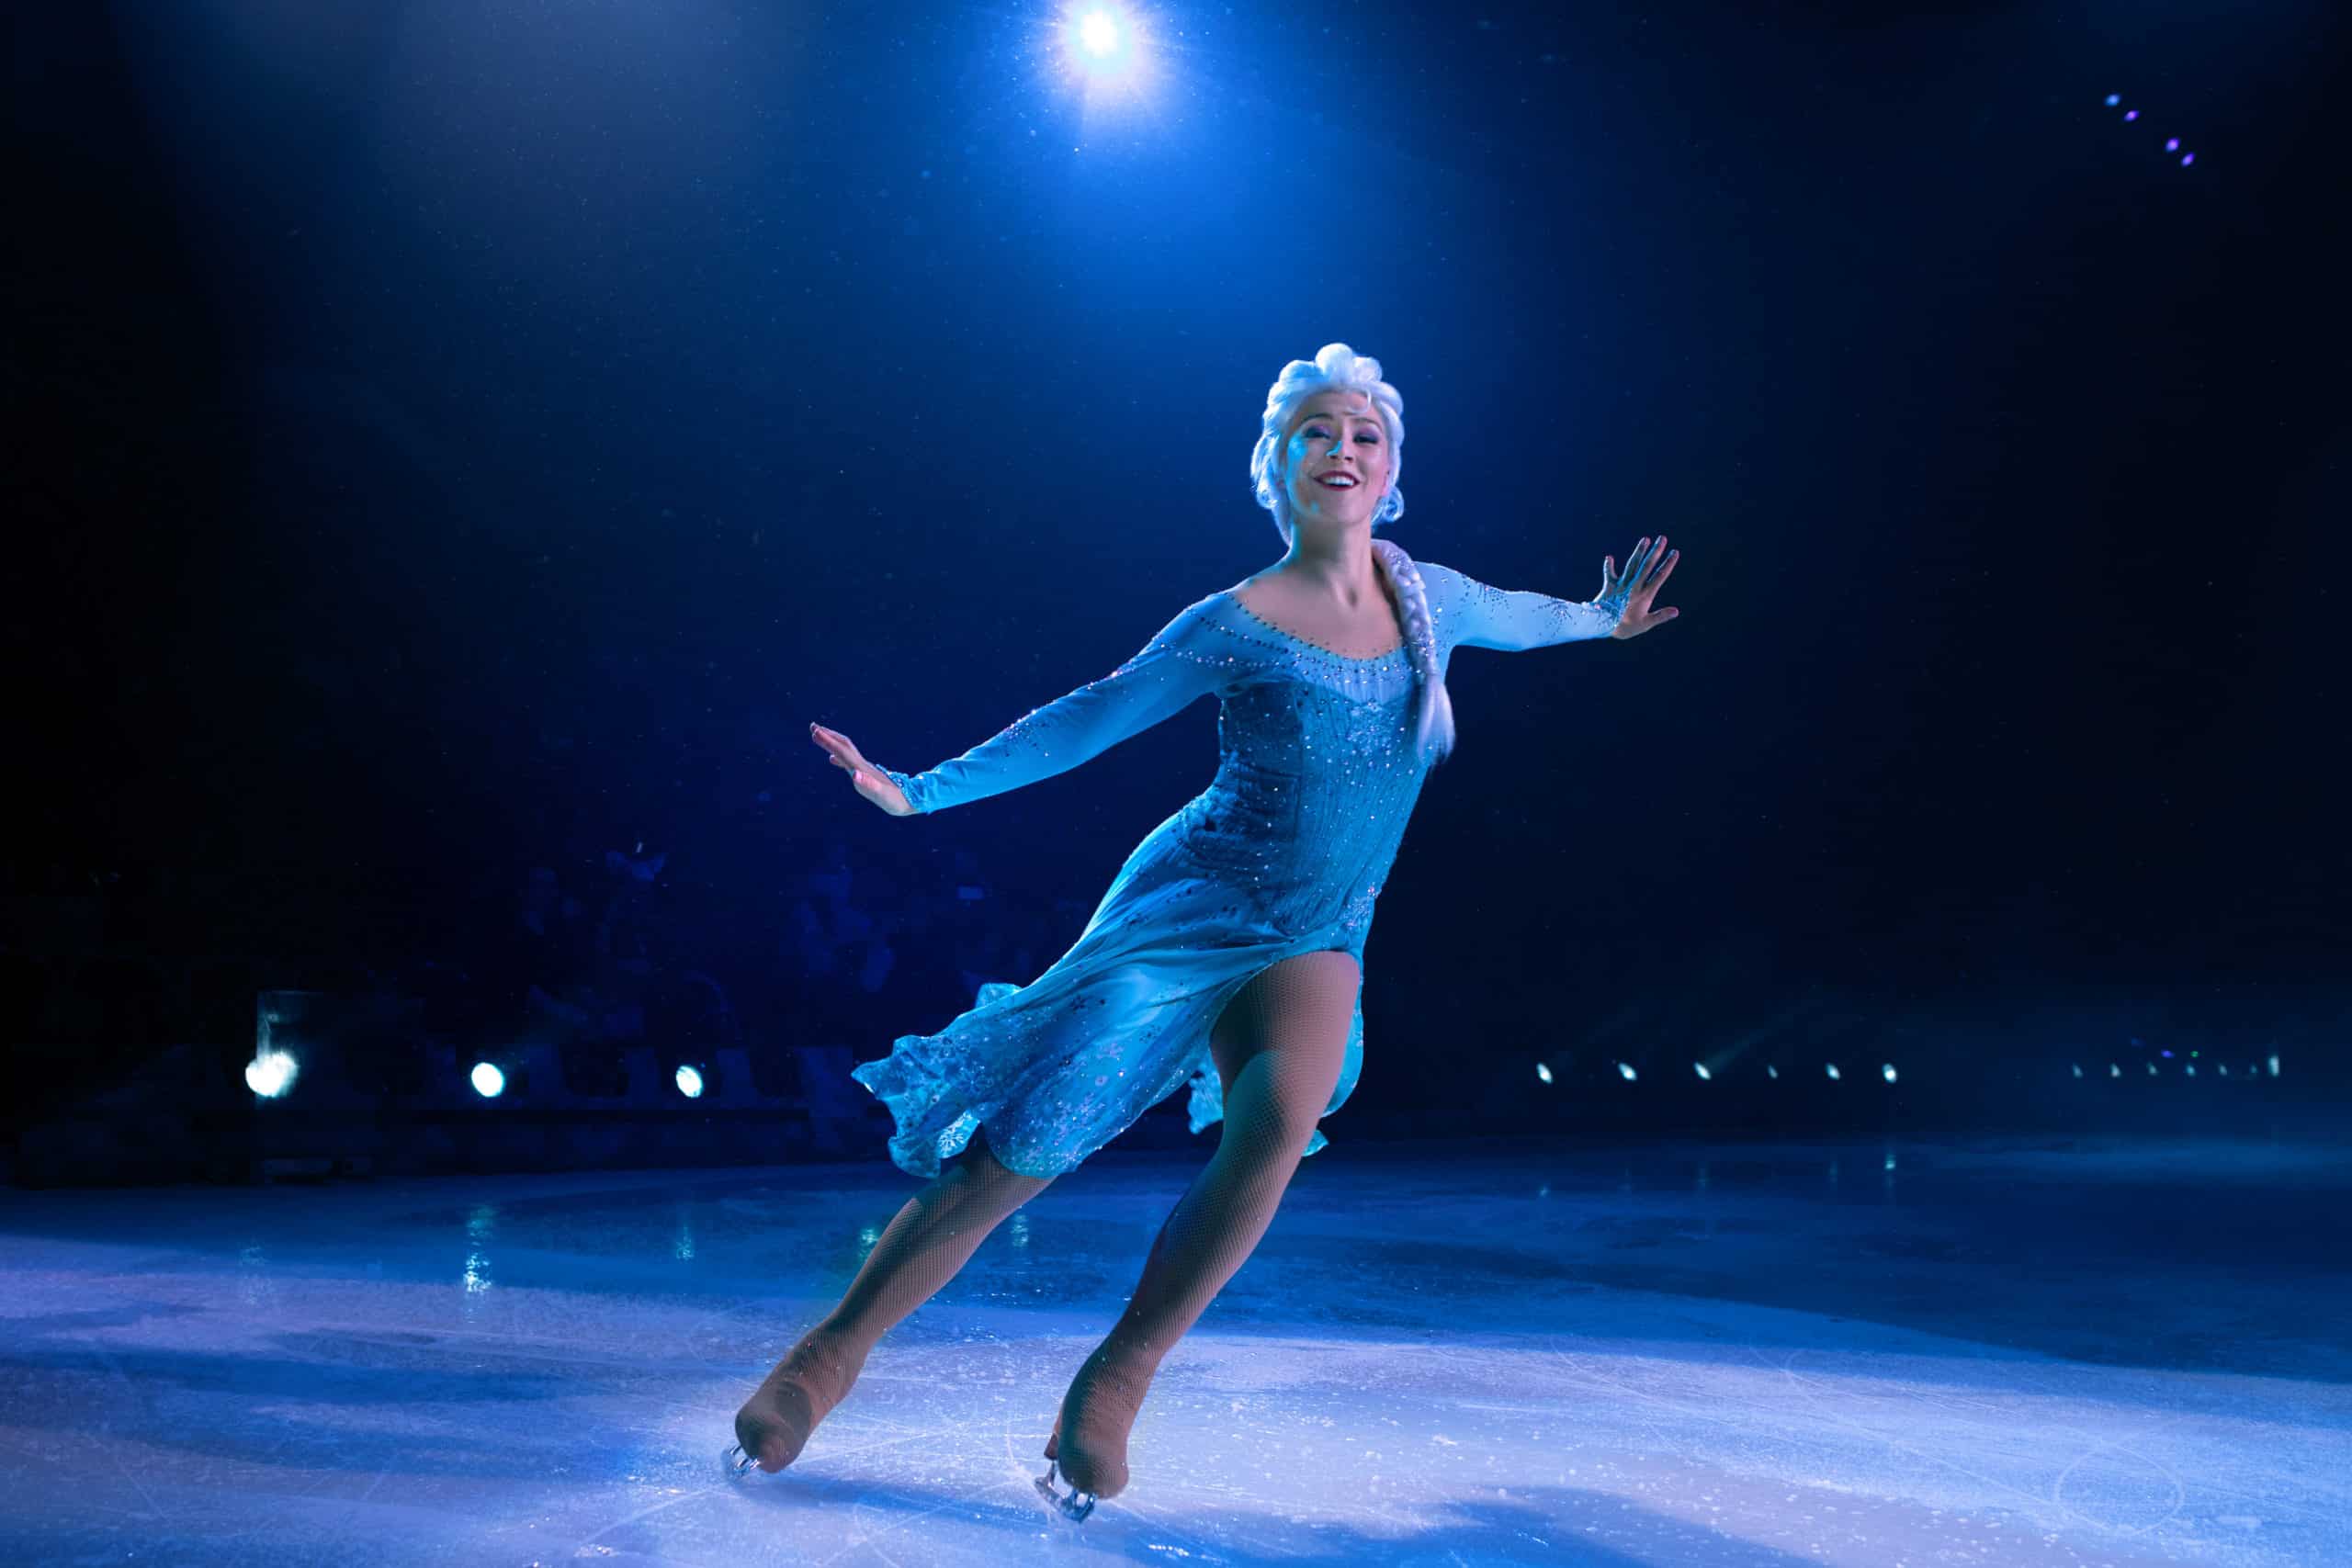 Elsa from Frozen ice skating